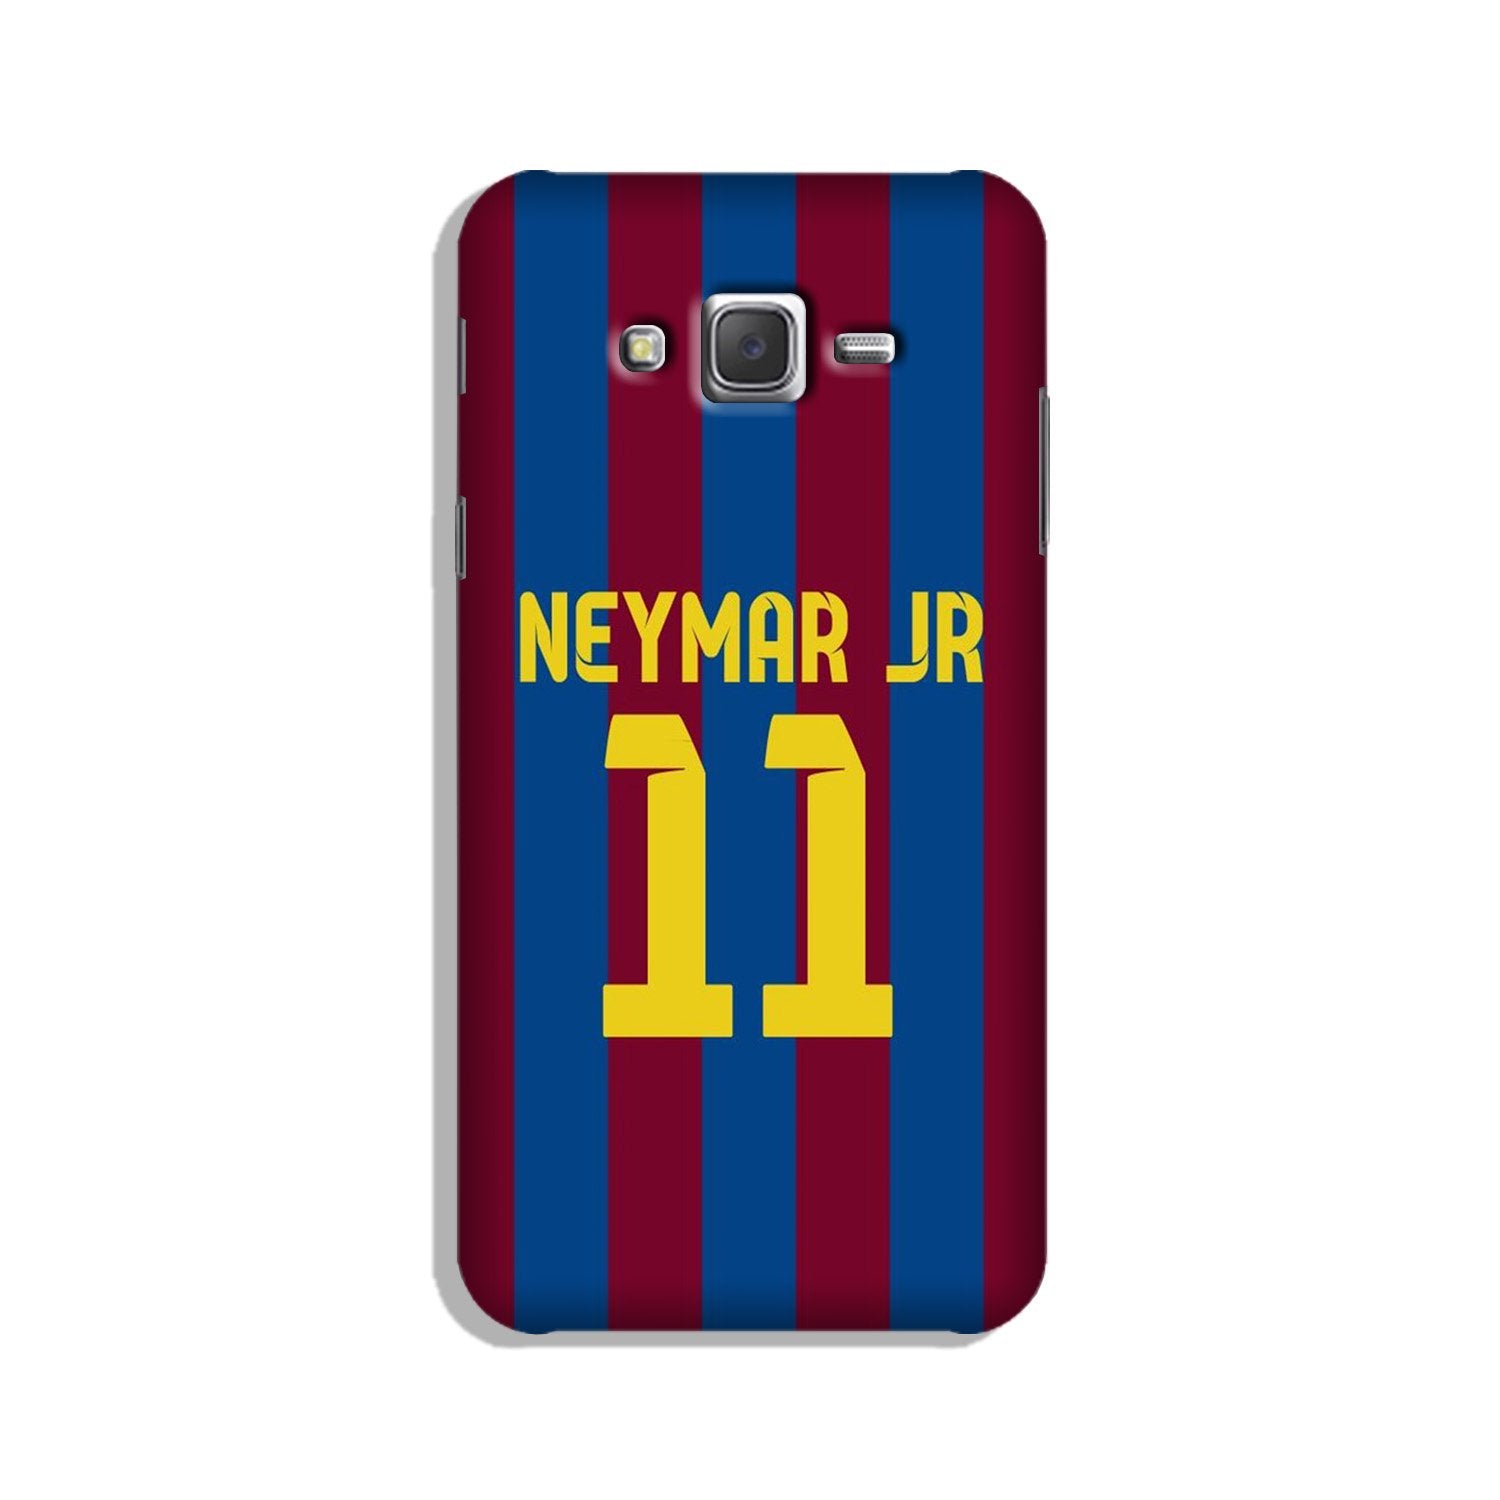 Neymar Jr Case for Galaxy On7/ On7 Pro(Design - 162)